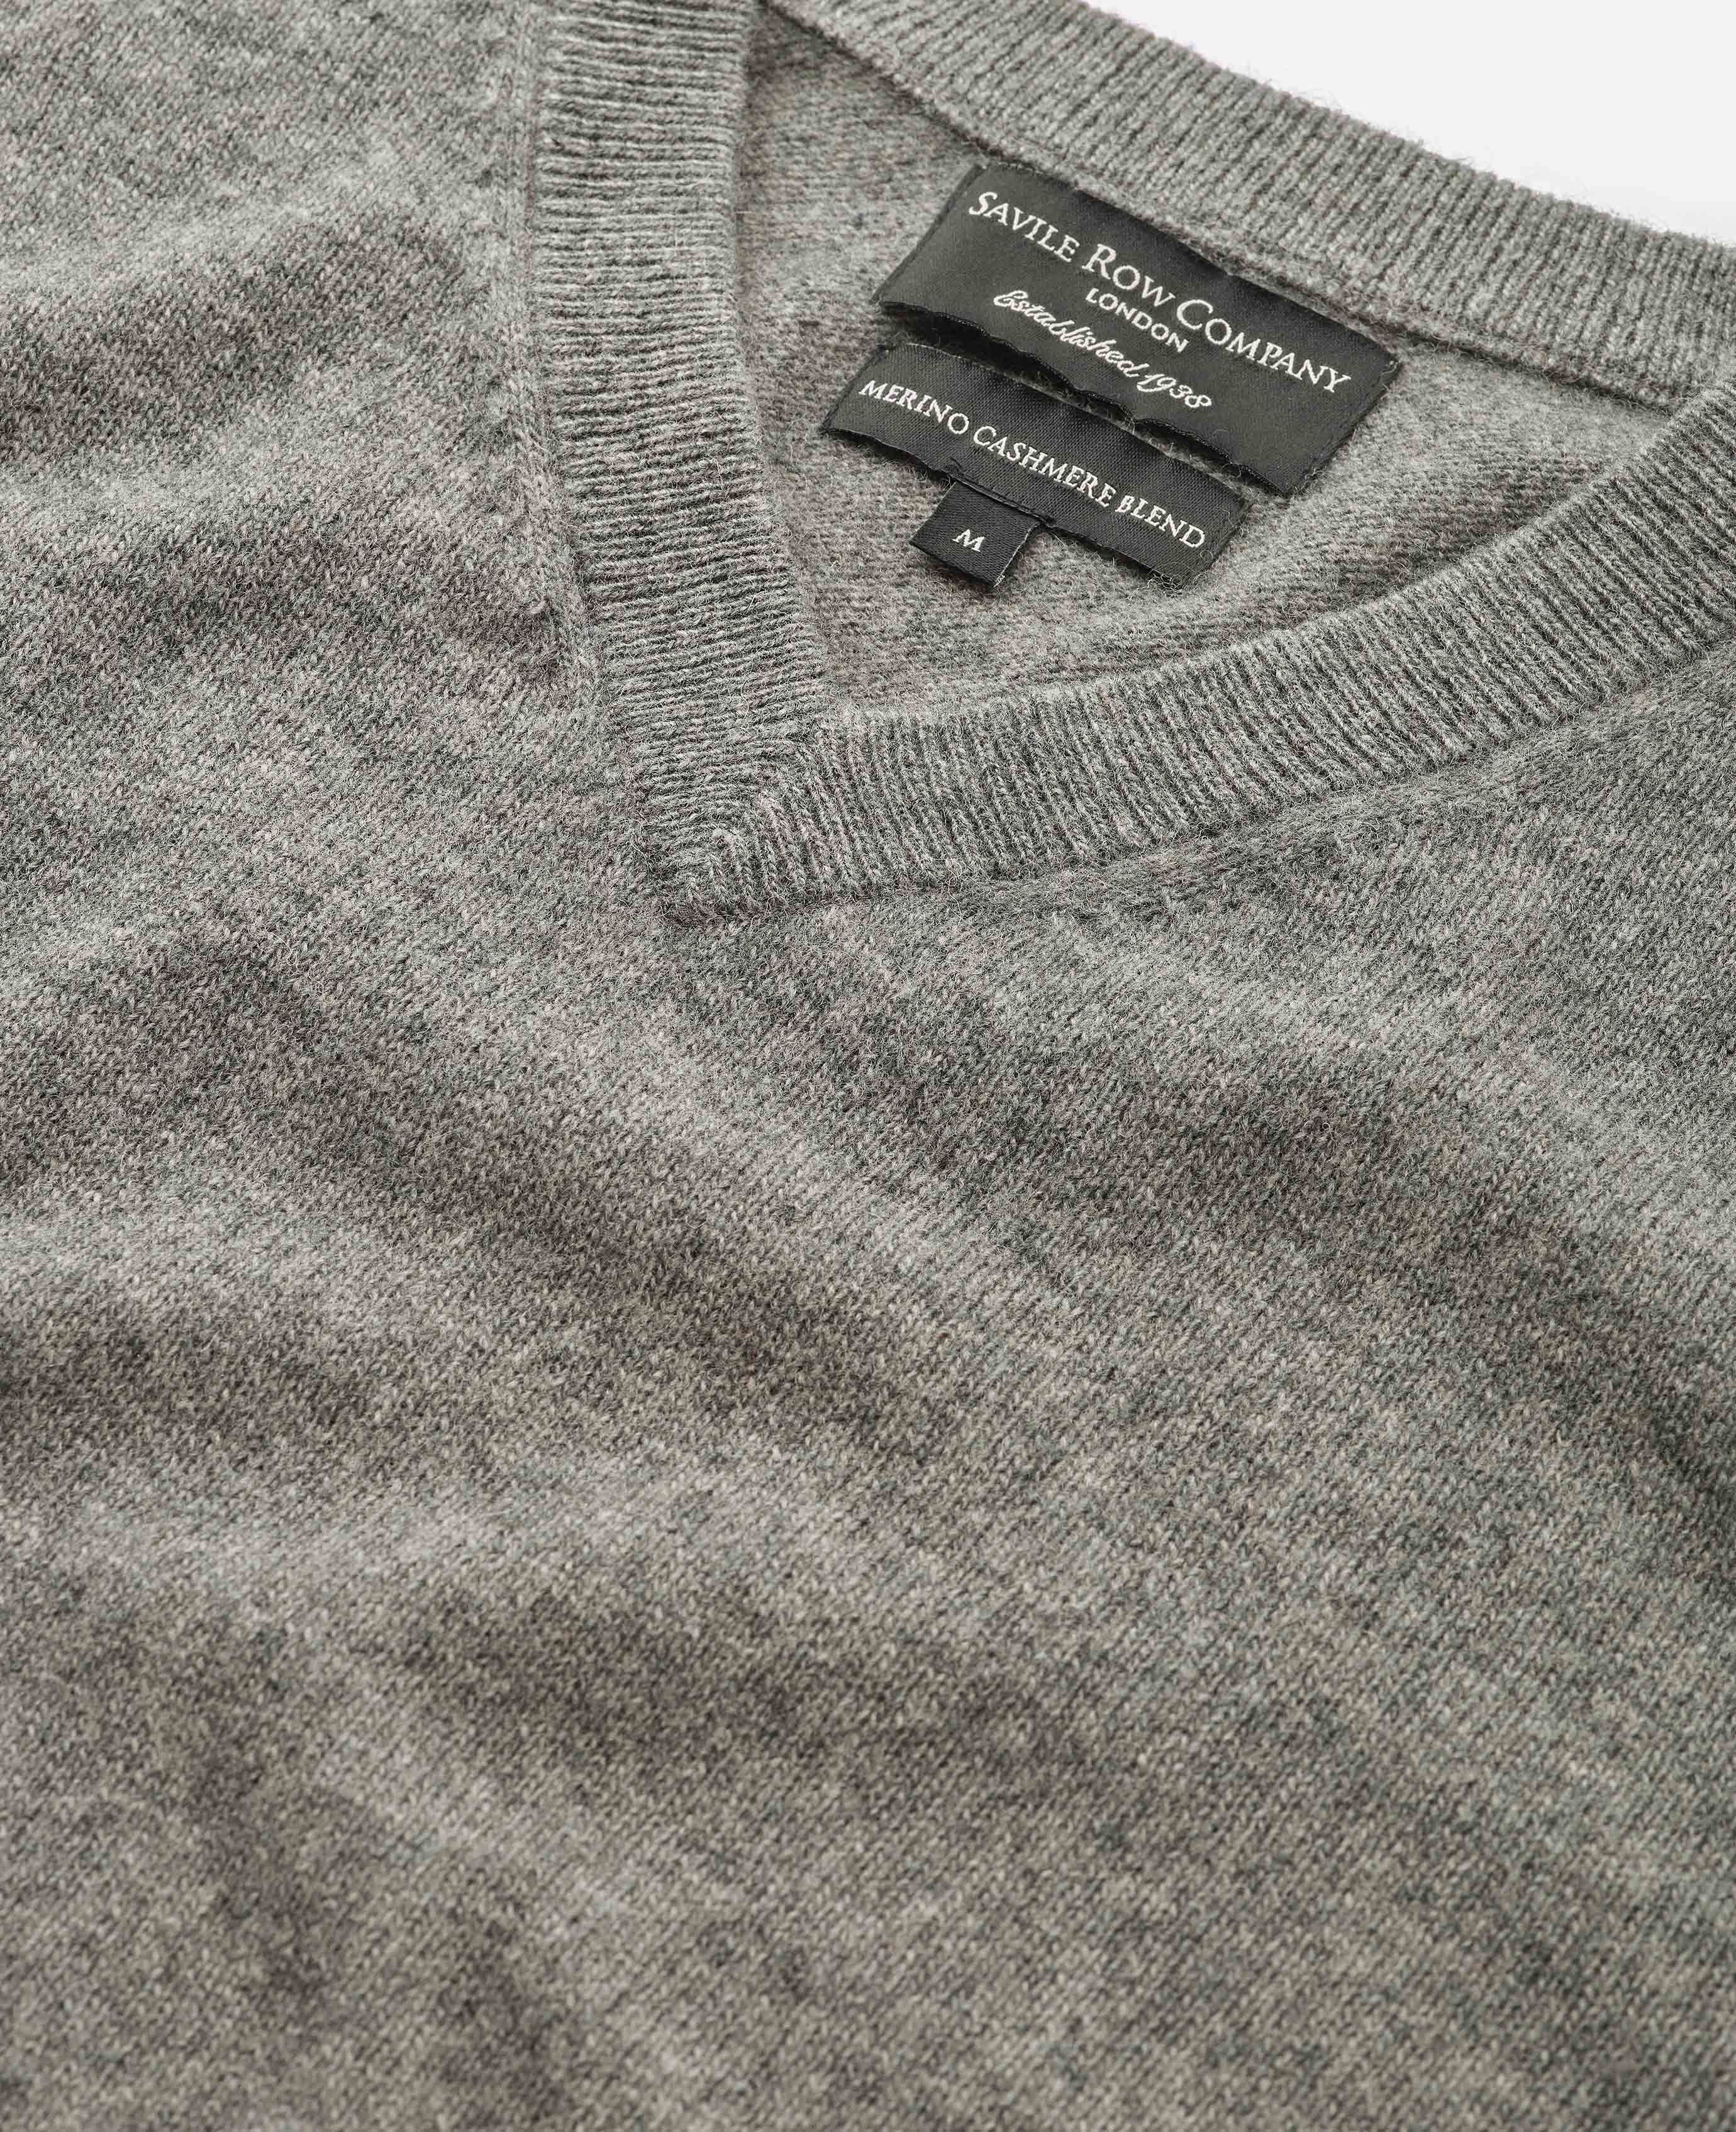 Men’s Wool Cashmere V-Neck Jumper in Grey | Savile Row Co